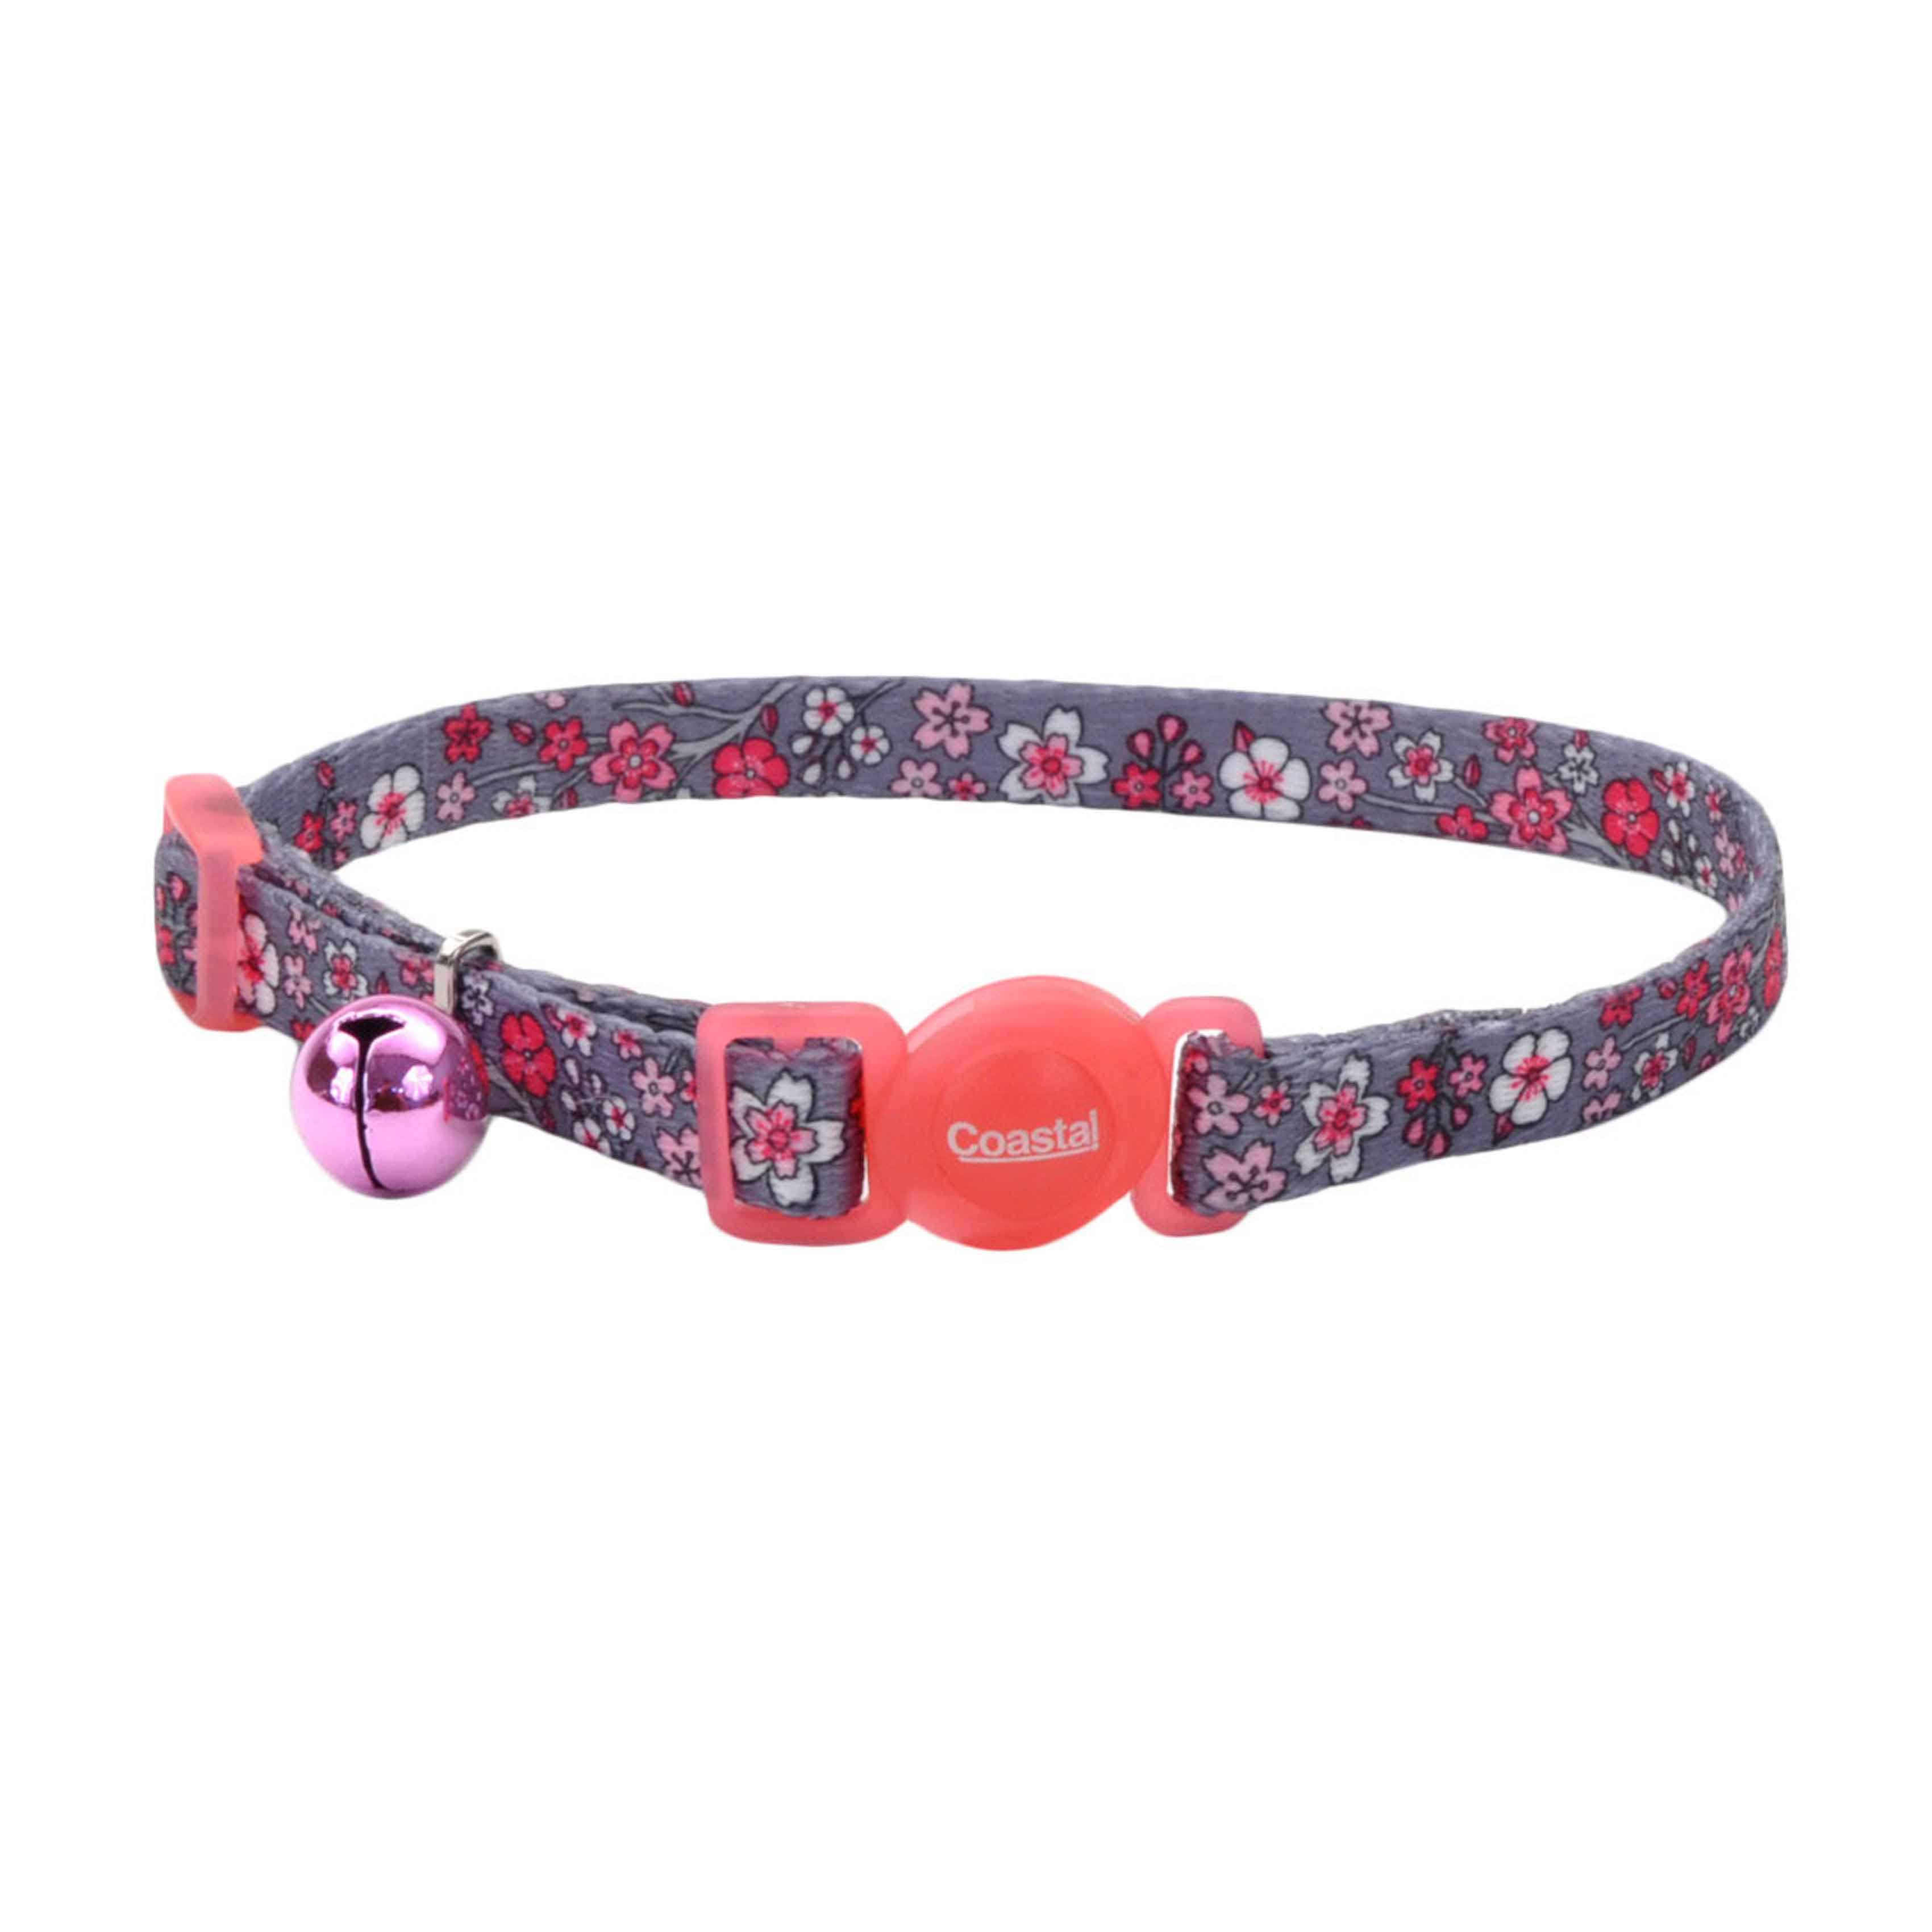 Safe Cat Fashion Adjustable Breakaway Cat Collar, Pink Cherry Blossoms